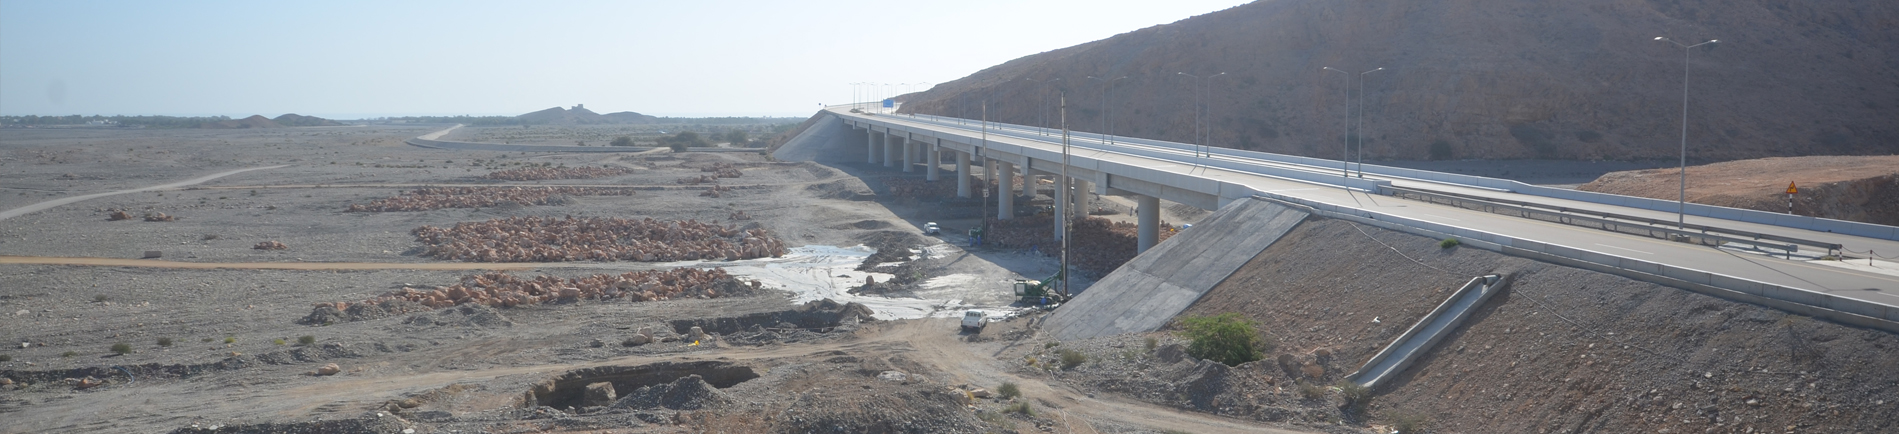 Rehabilitation Works for Roads, Bridges and Wadis in Quriyat, Lot 2